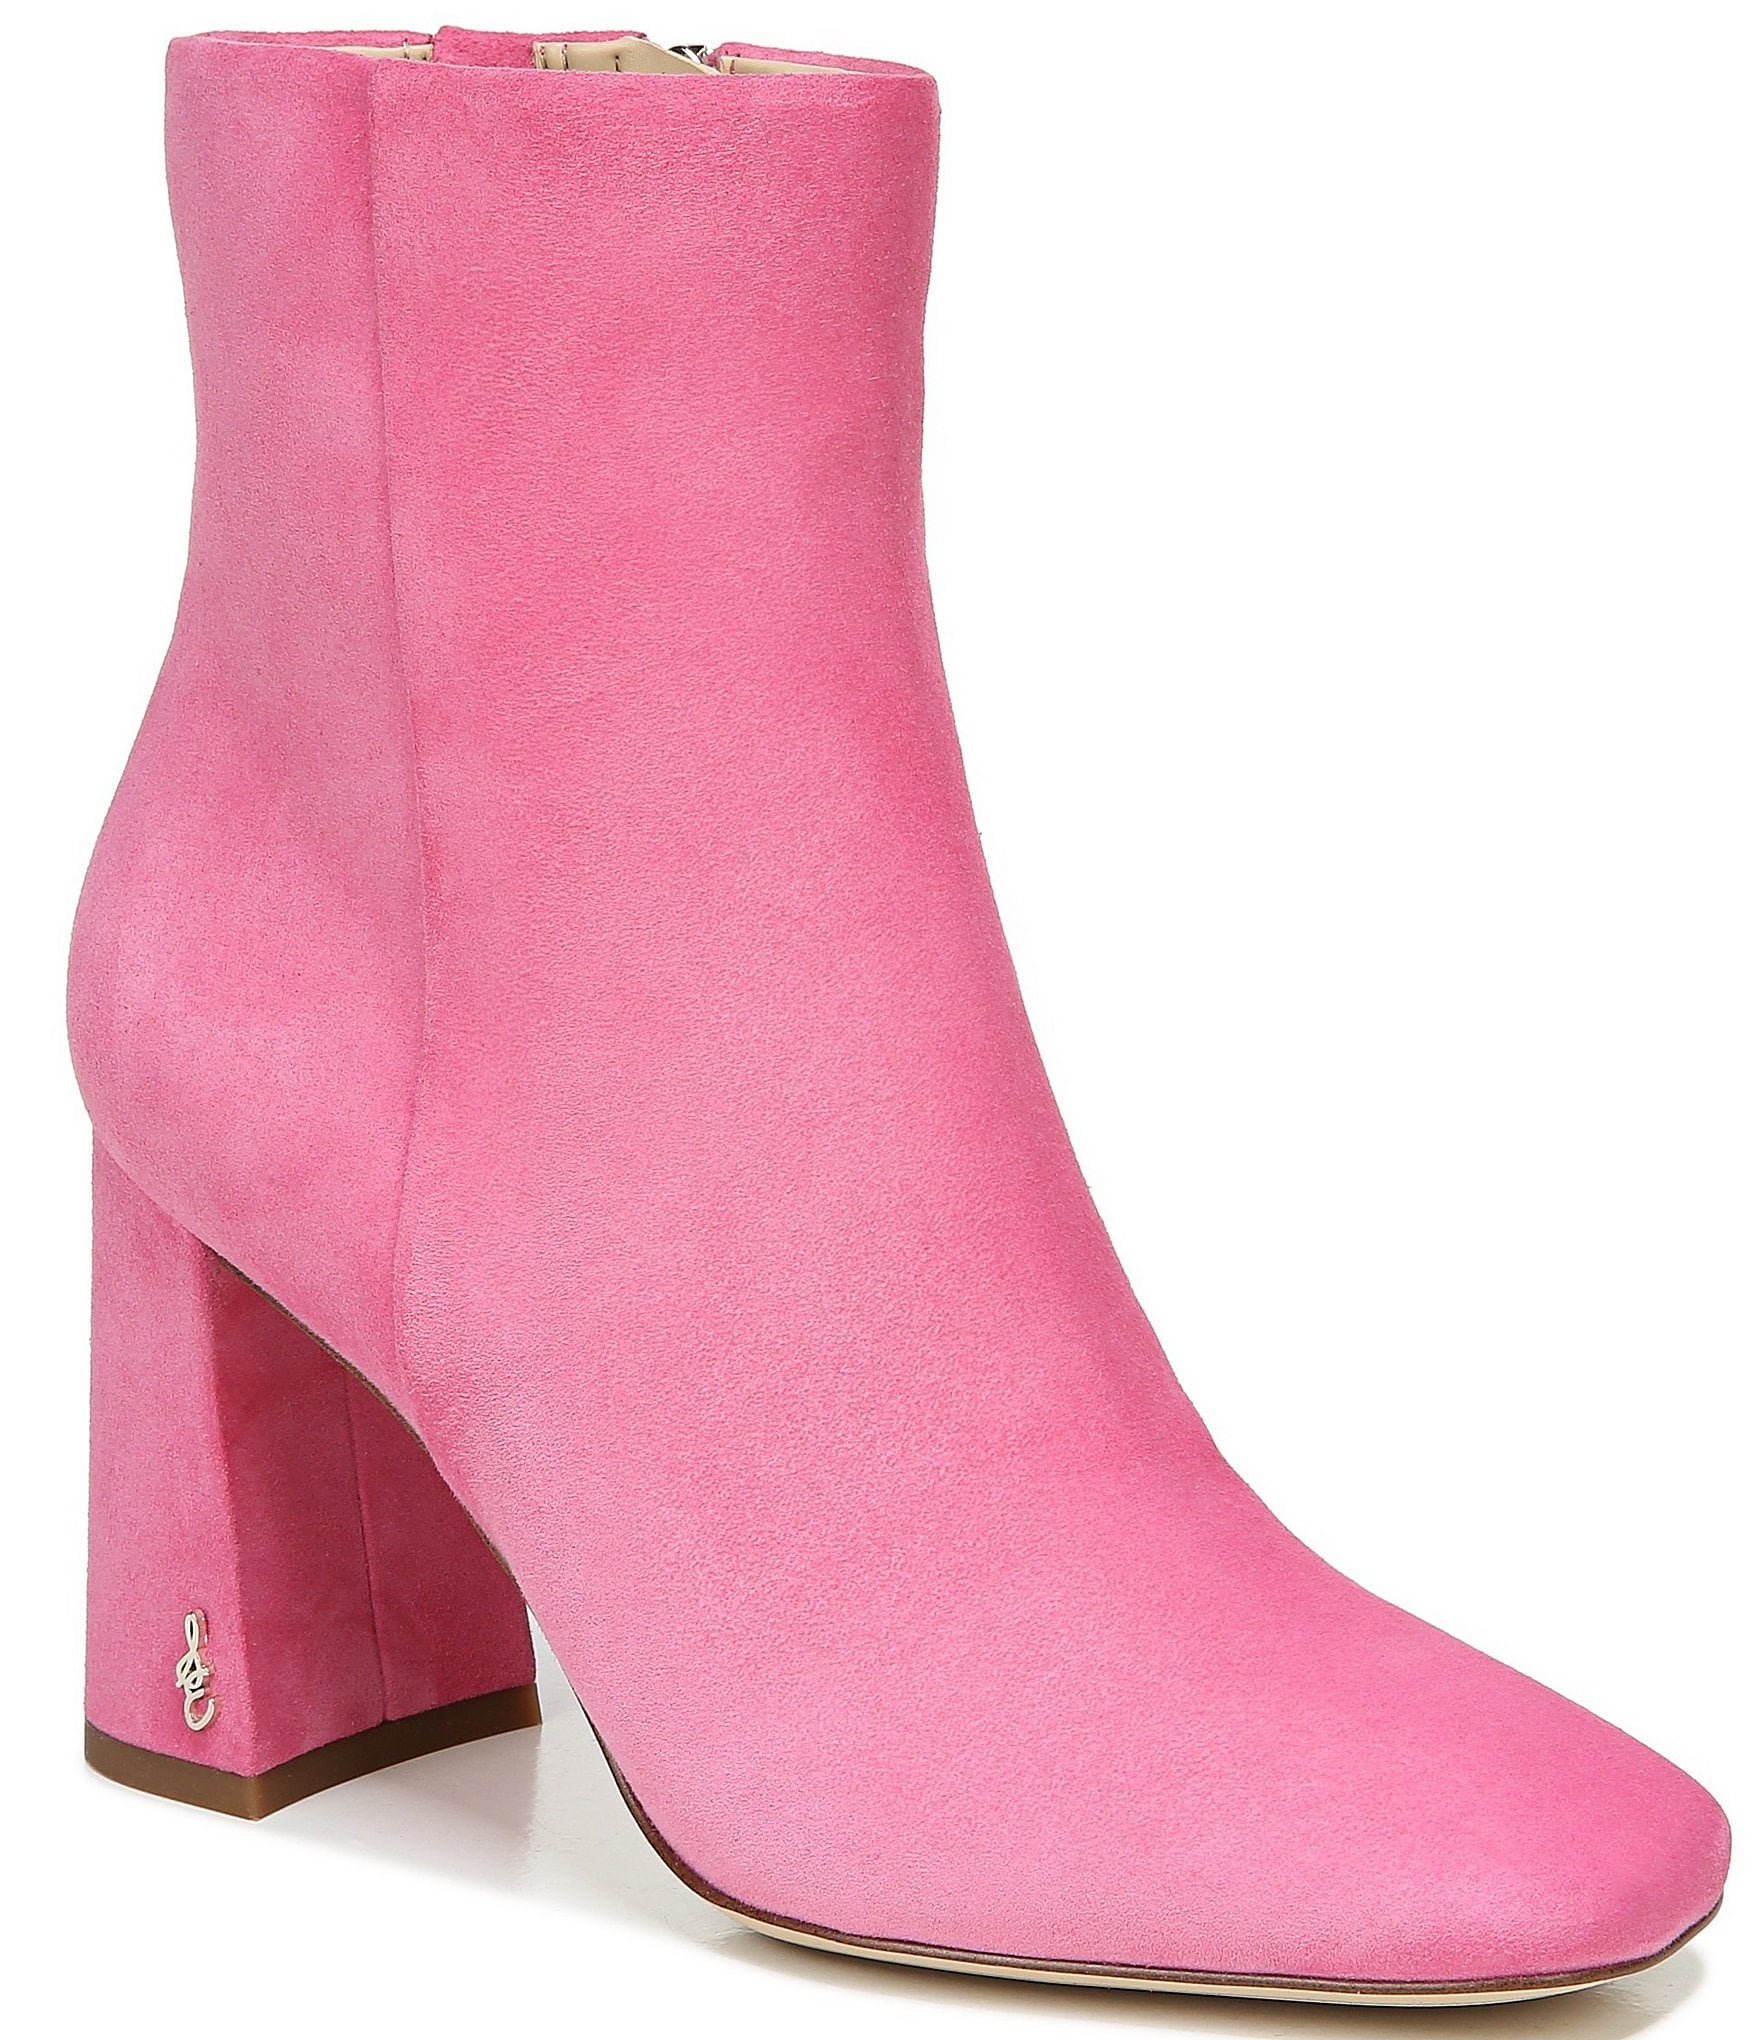 sam edelman pink velvet heels